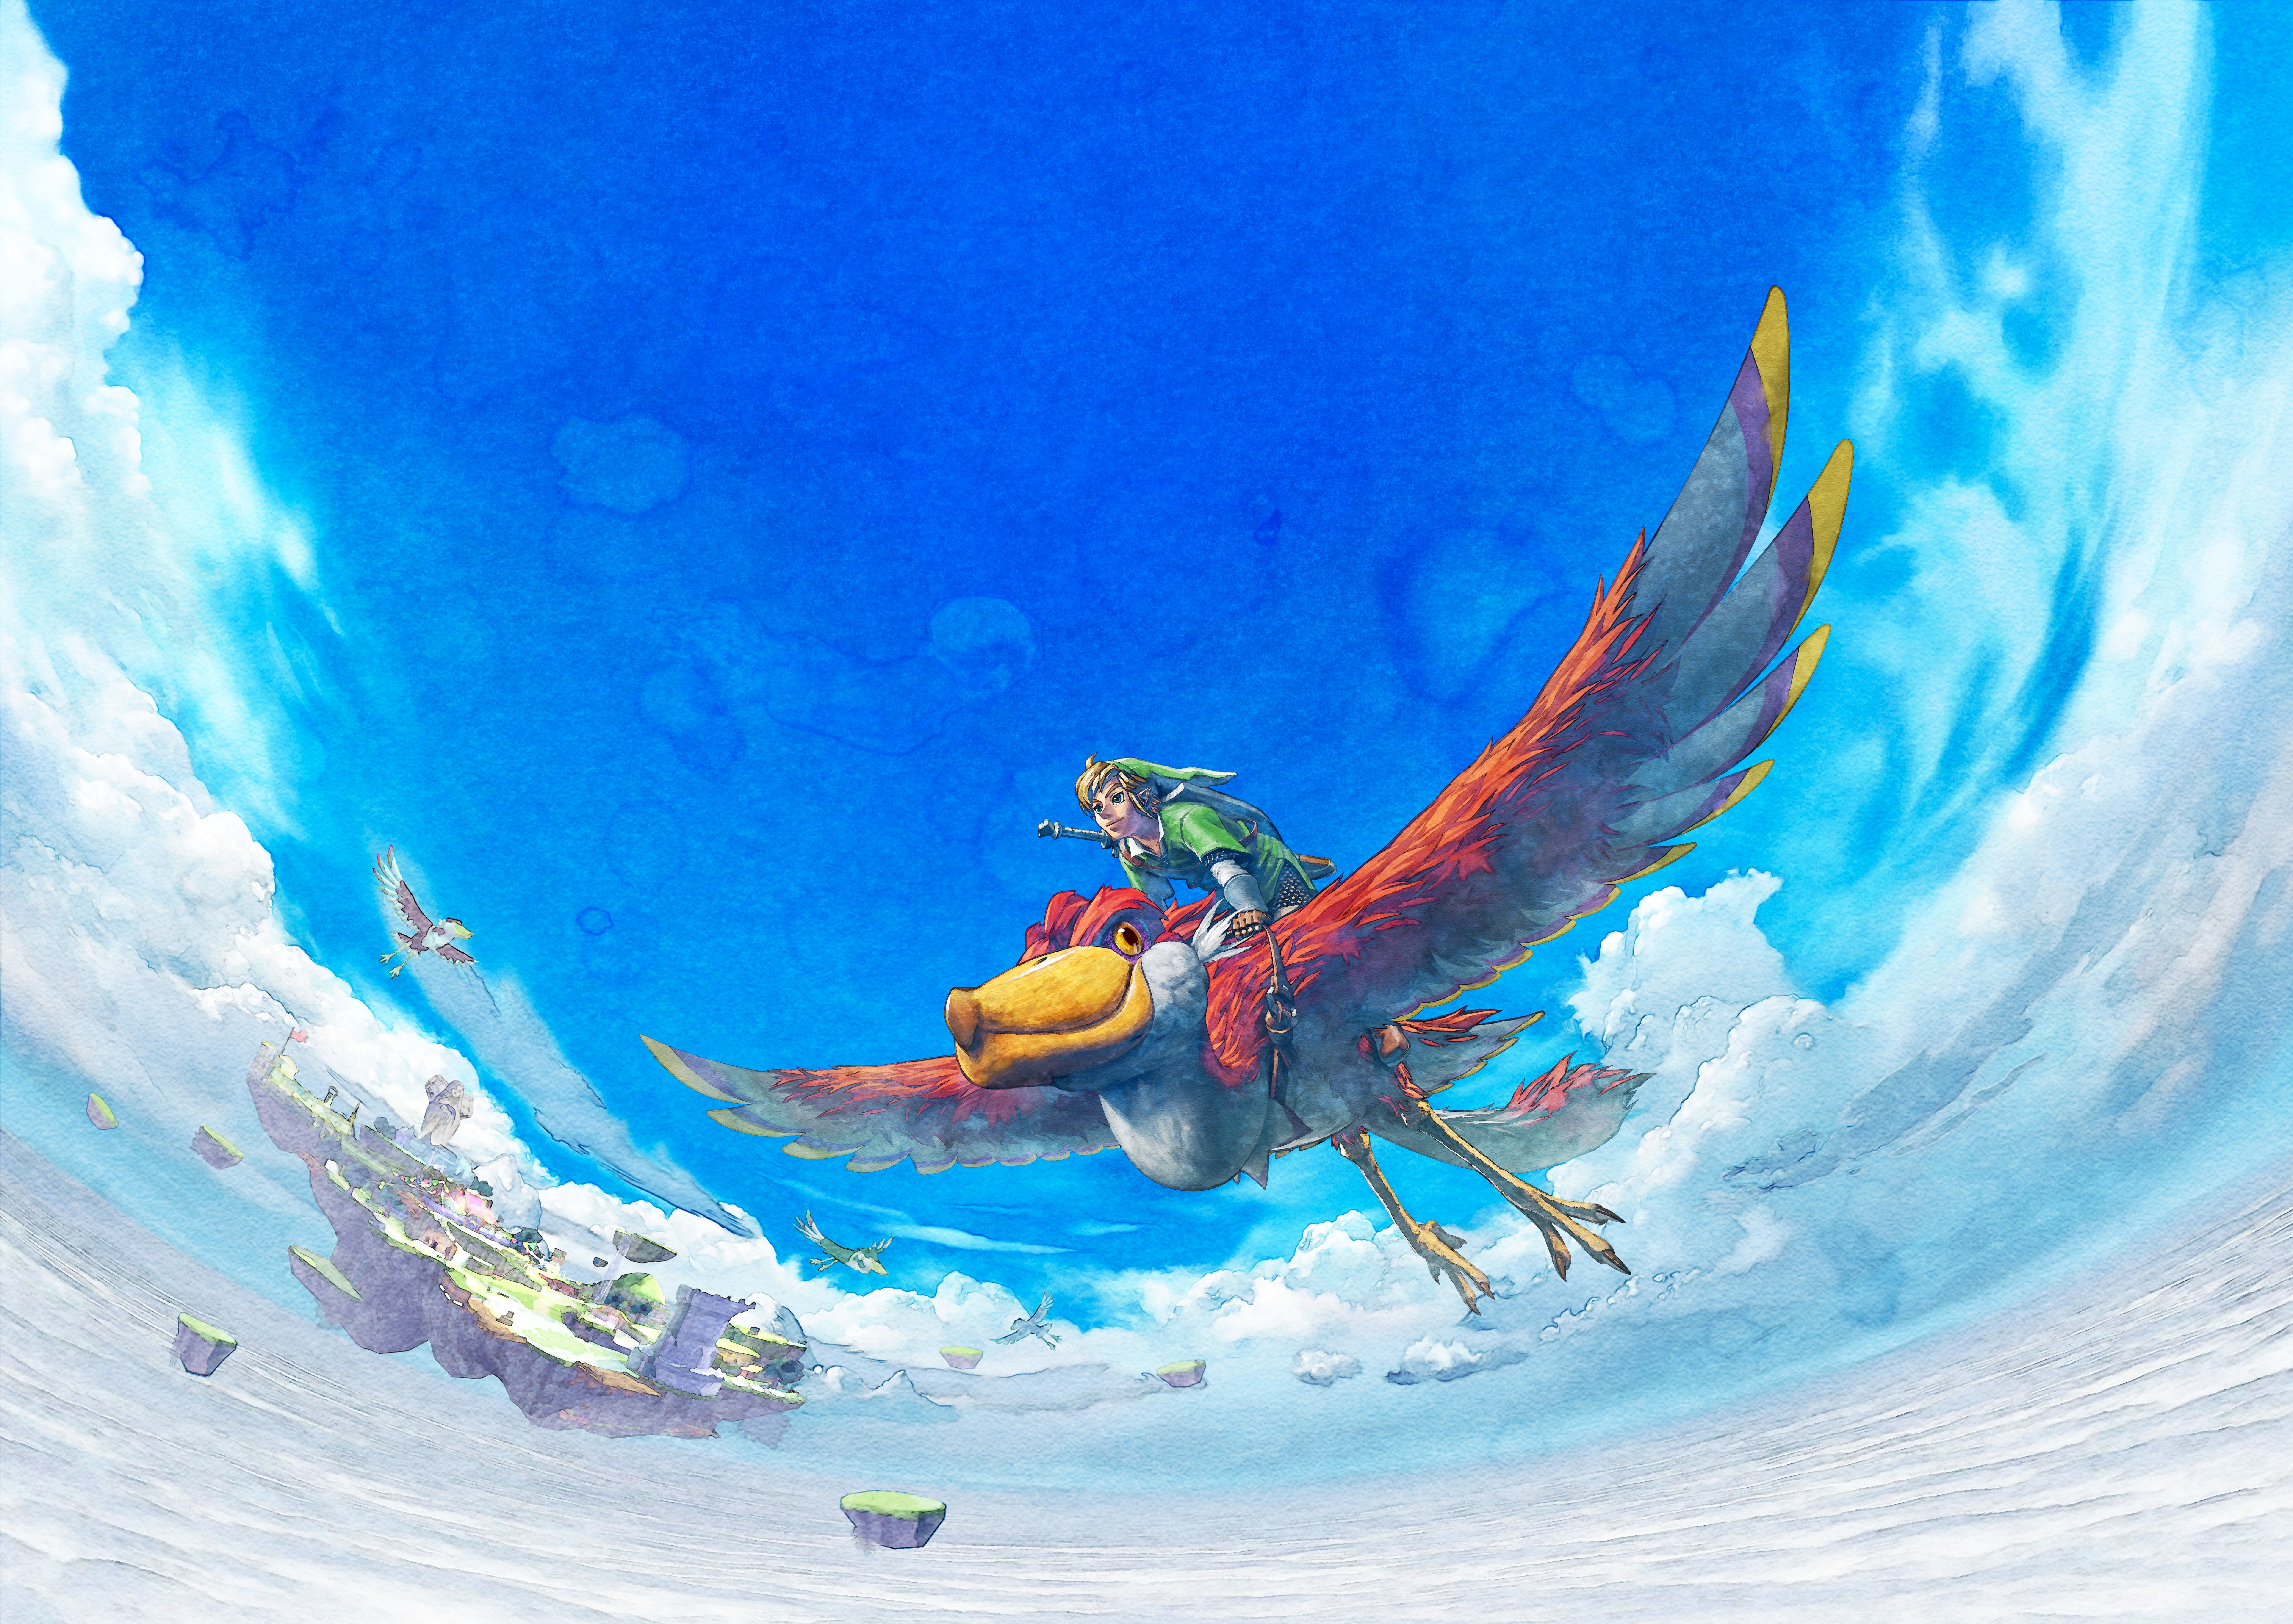 The Legend Of Zelda Skyward Sword HD Wallpaper Background